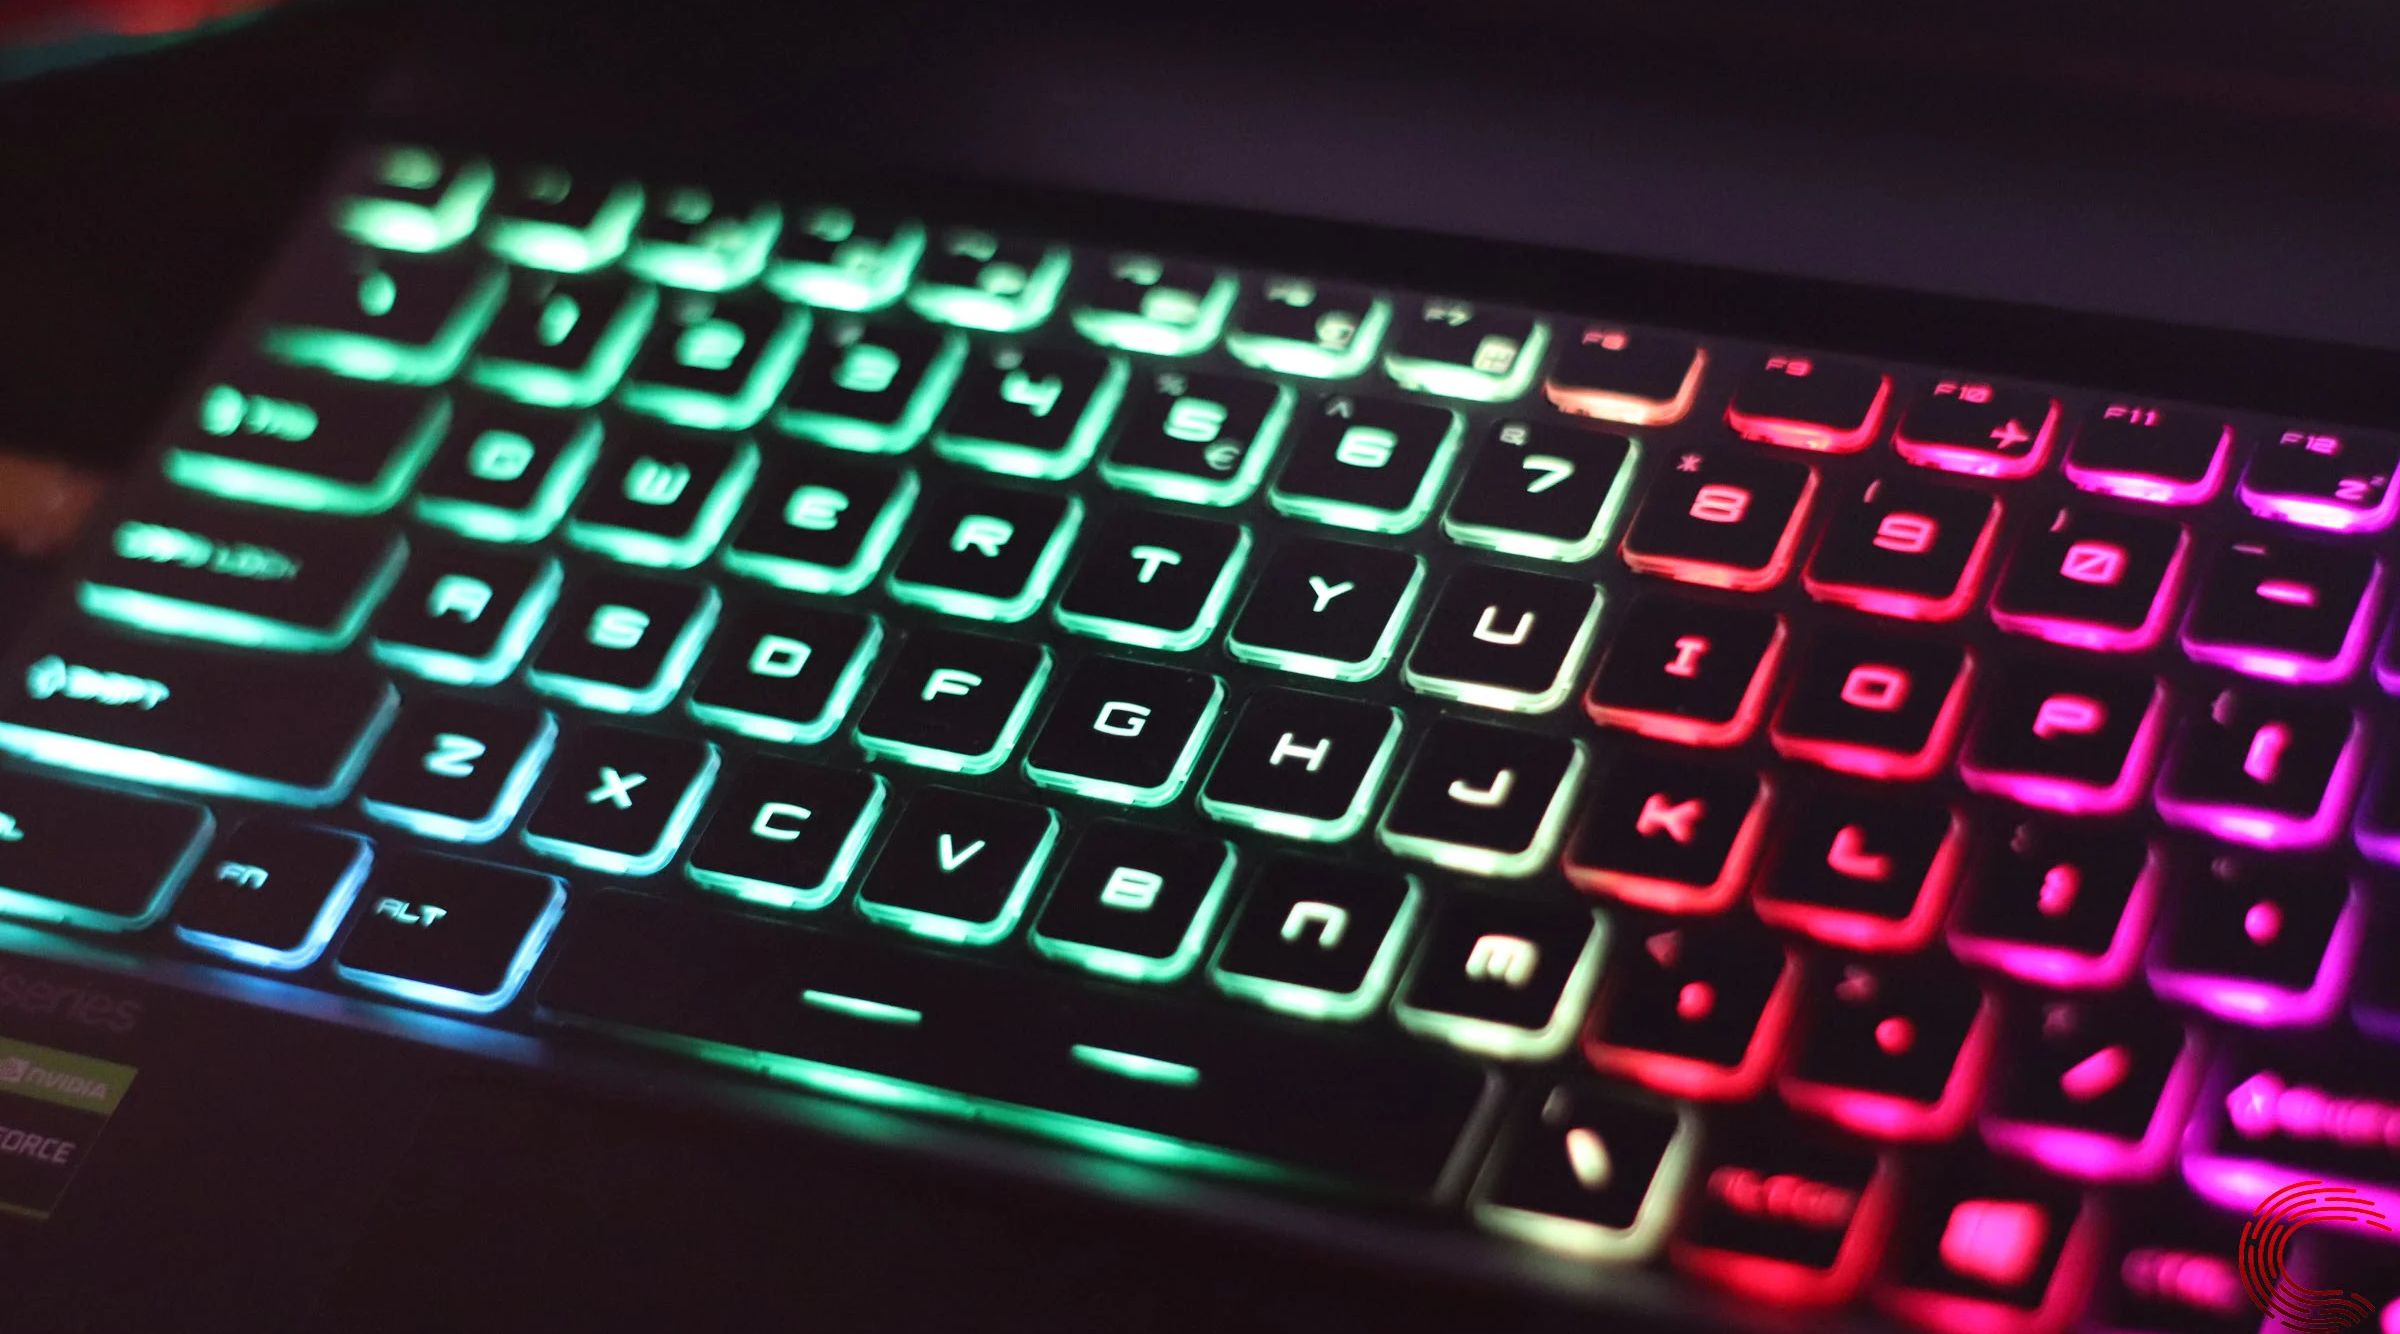 how-to-turn-off-msi-gaming-laptop-keyboard-light